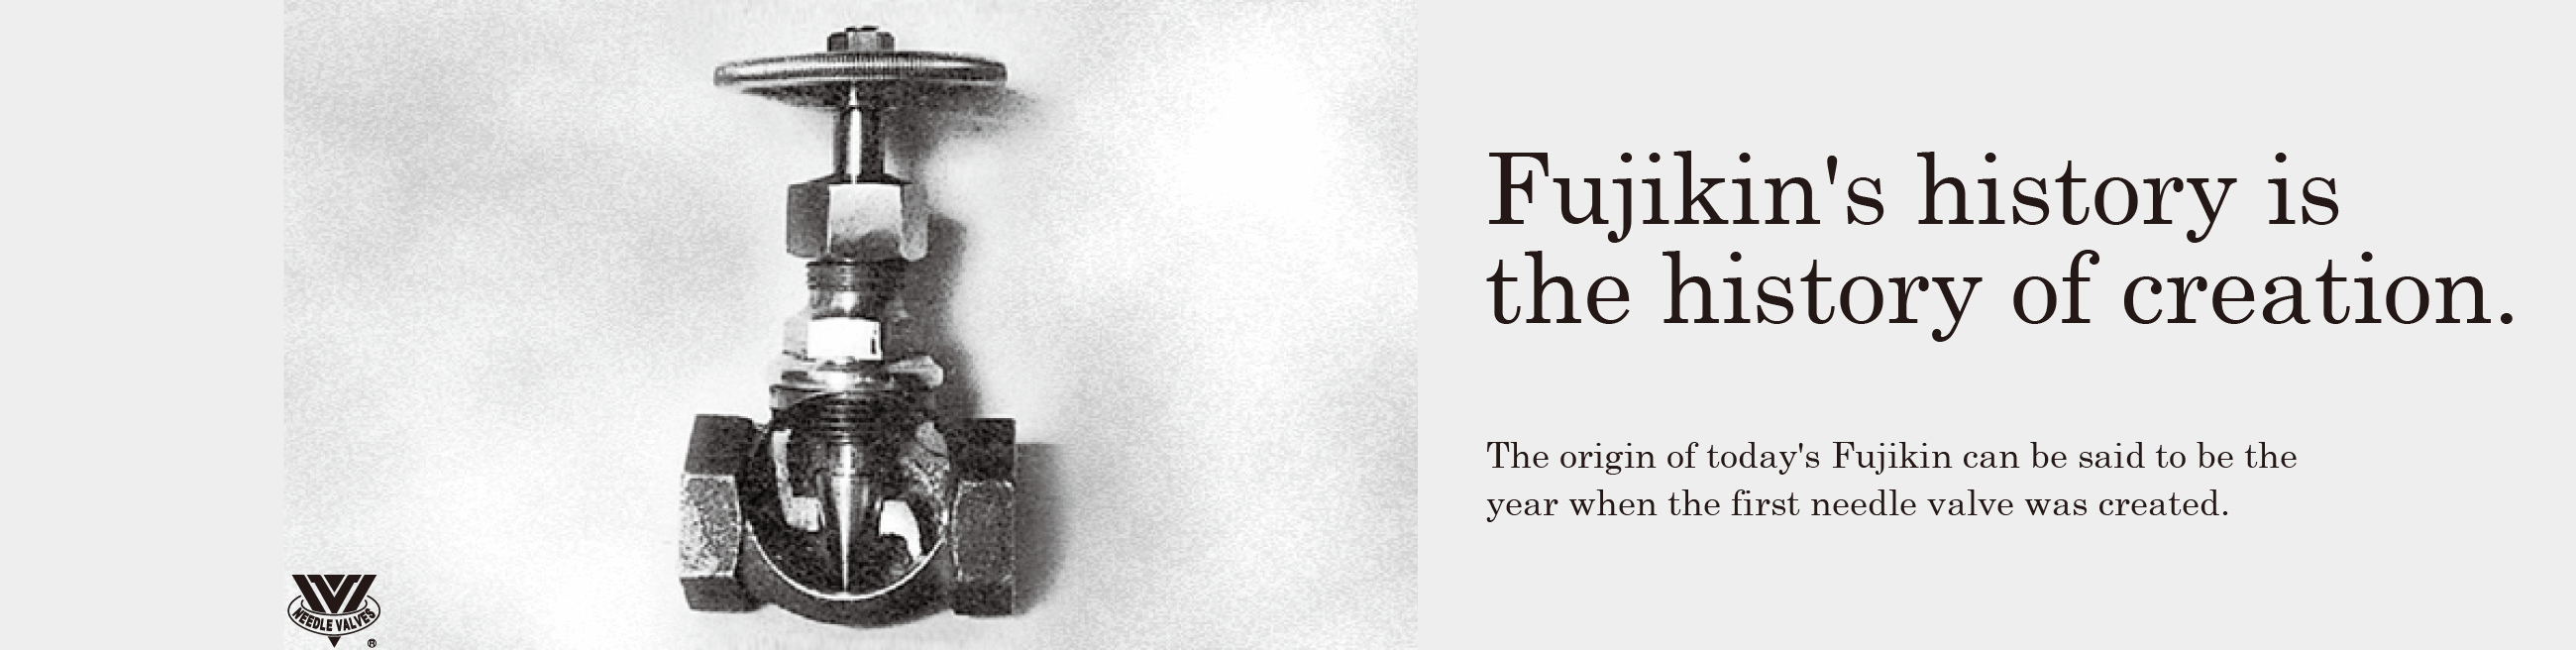 Fujikin's history is the history of creation.